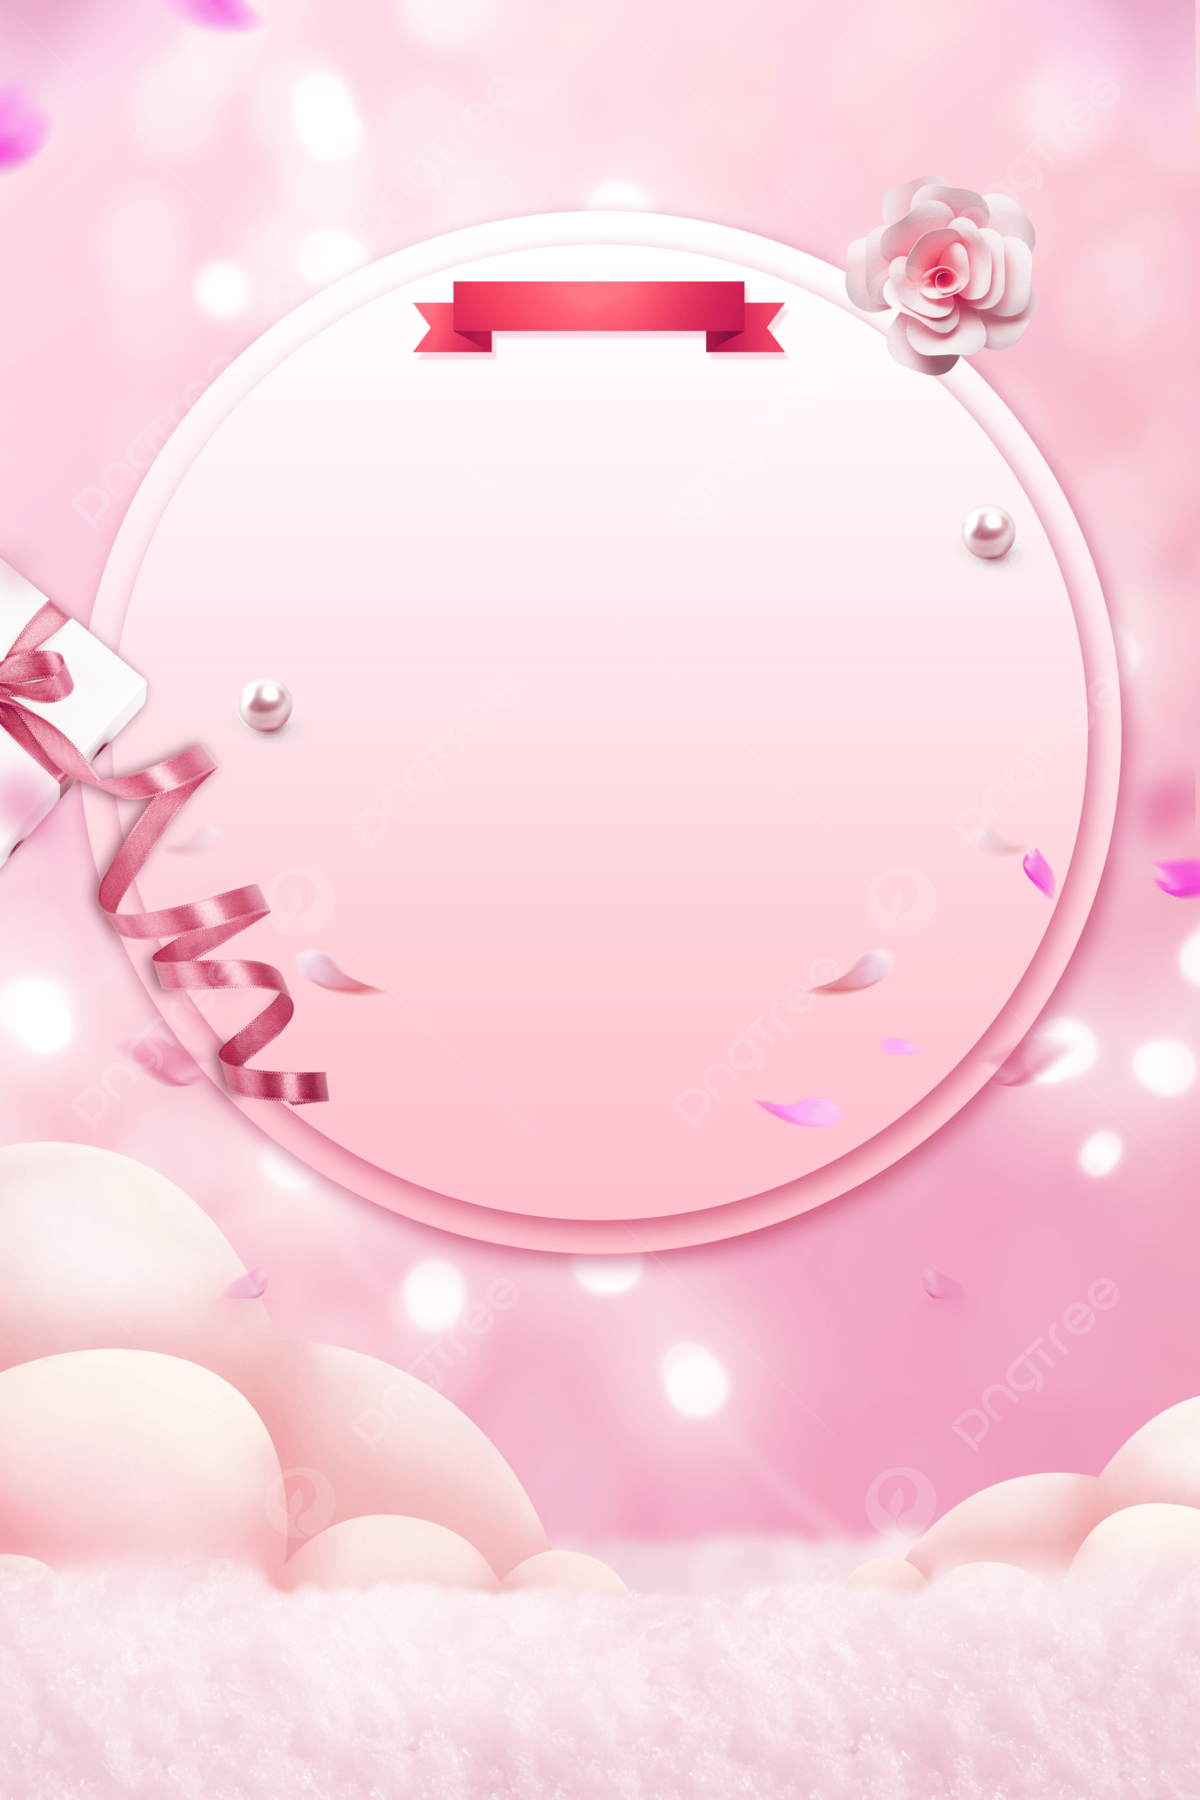  Pinke ästhetik Hintergrundbild 1200x1800. Pink Aesthetic Cosmetics Background Wallpaper Image For Free Download